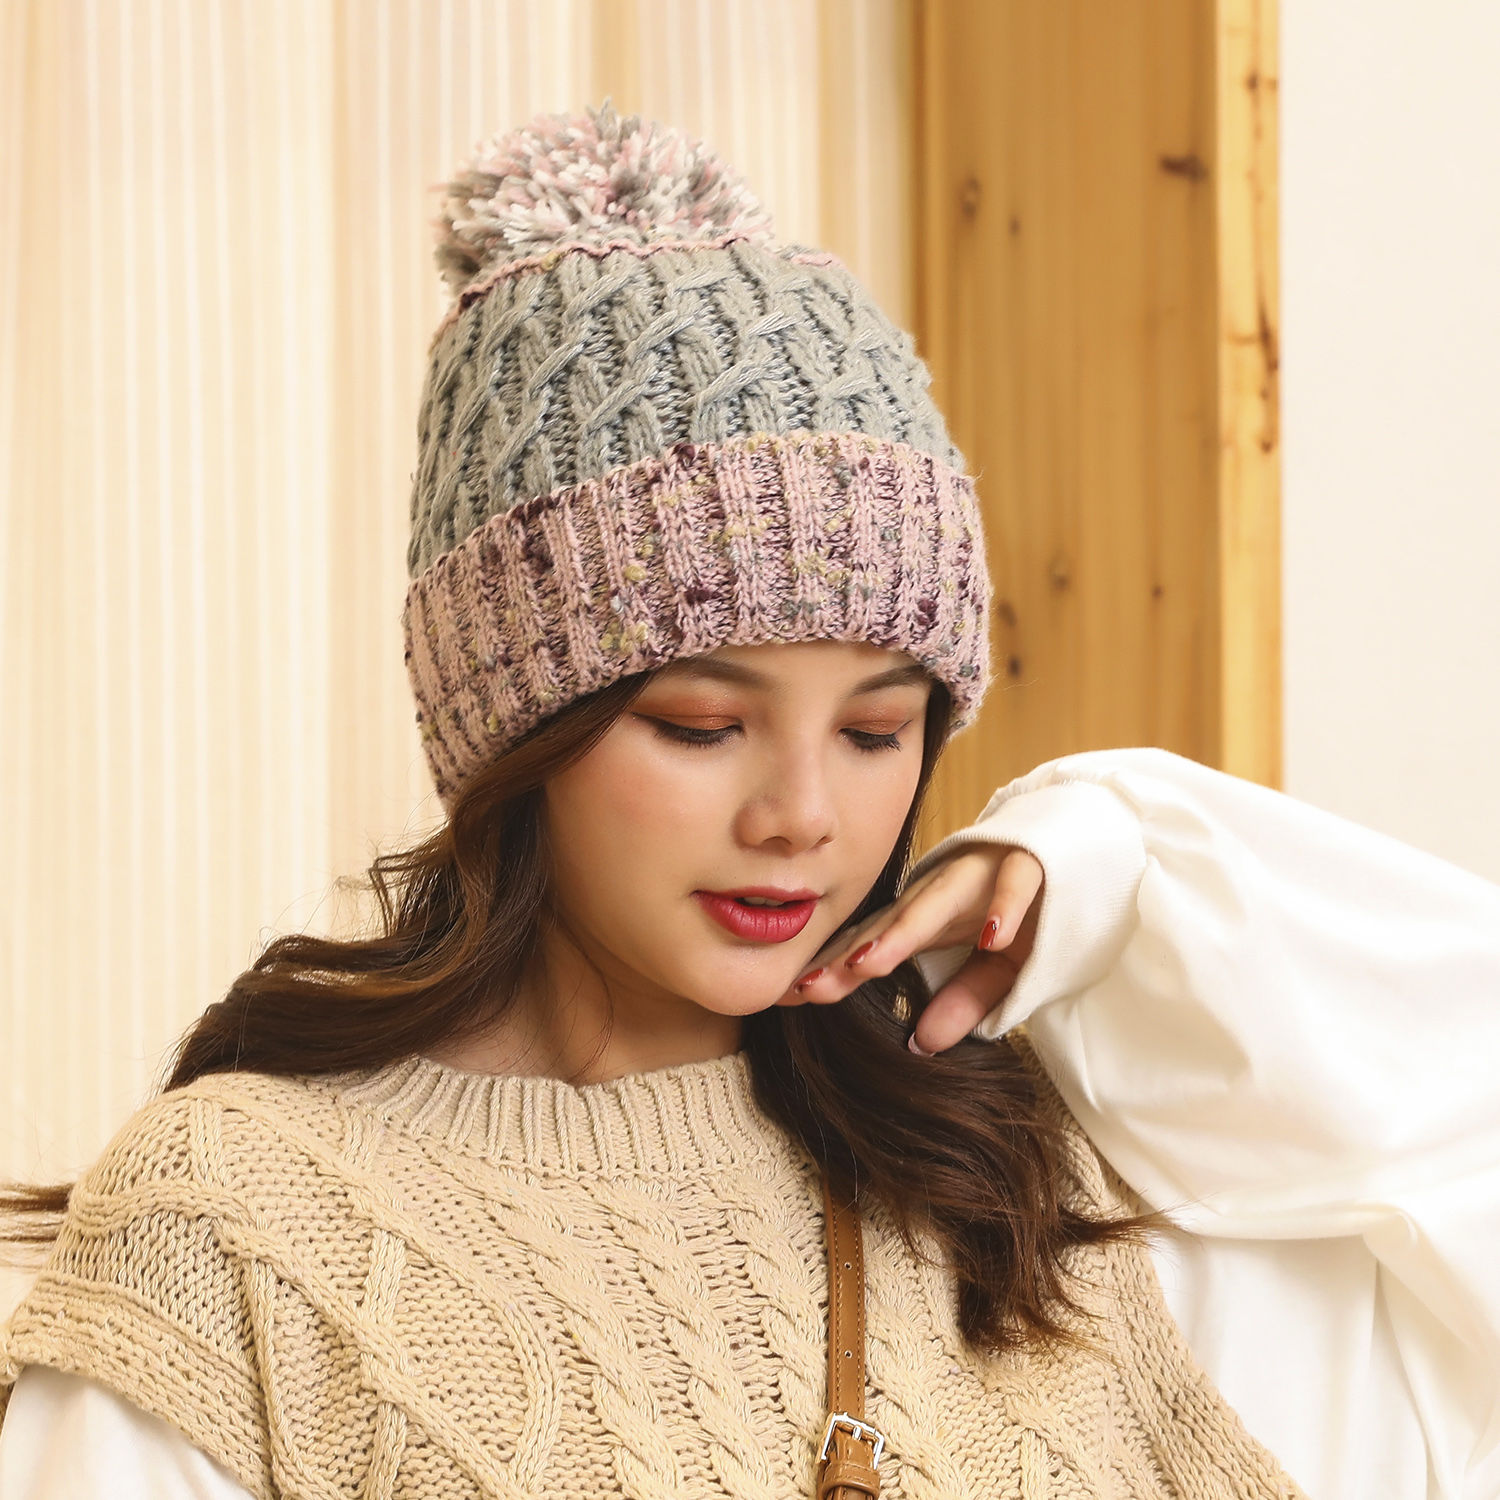 Hat women's winter new knitted woolen hat women's fleece thickening women's warm cycling hat versatile fashion